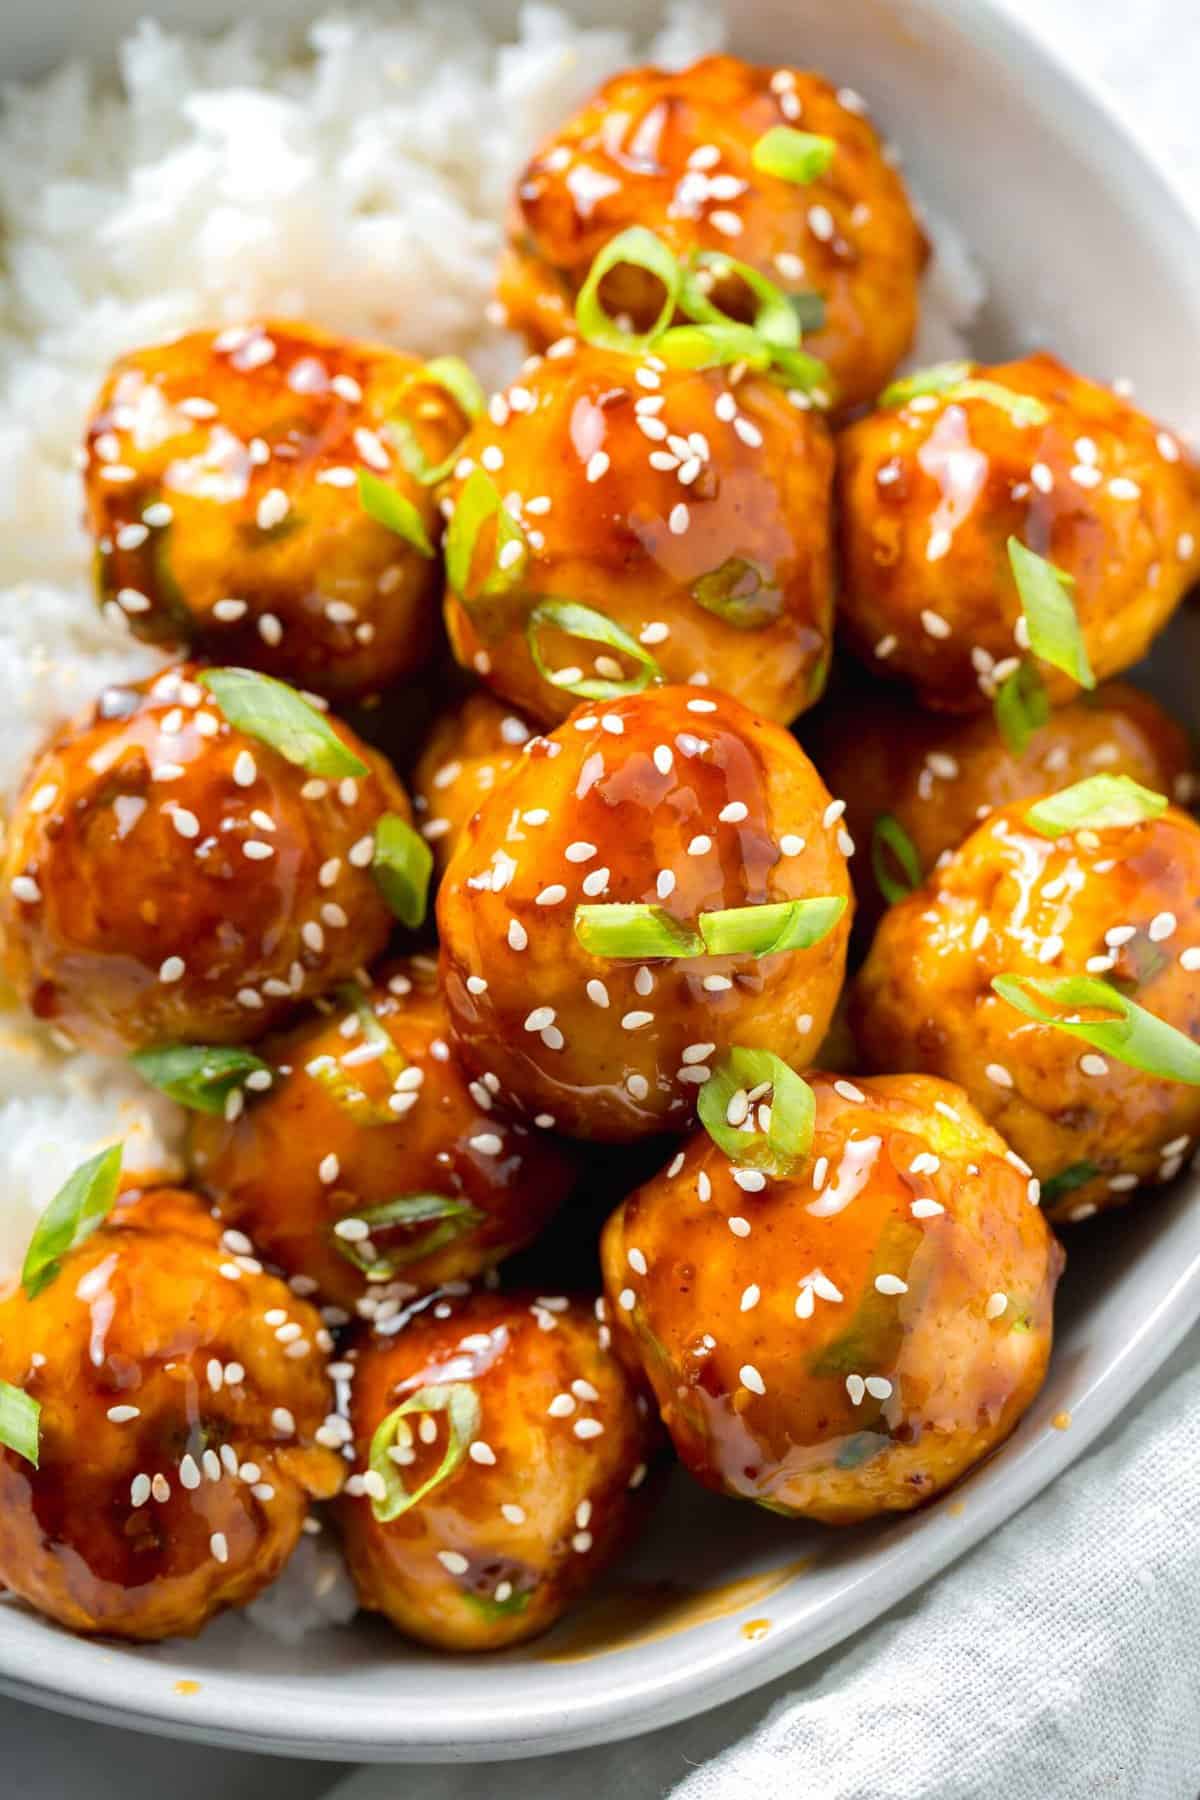 up close image of teriyaki chicken meatballs glazed in teriyaki sauce with fresh scallions and sesame seeds